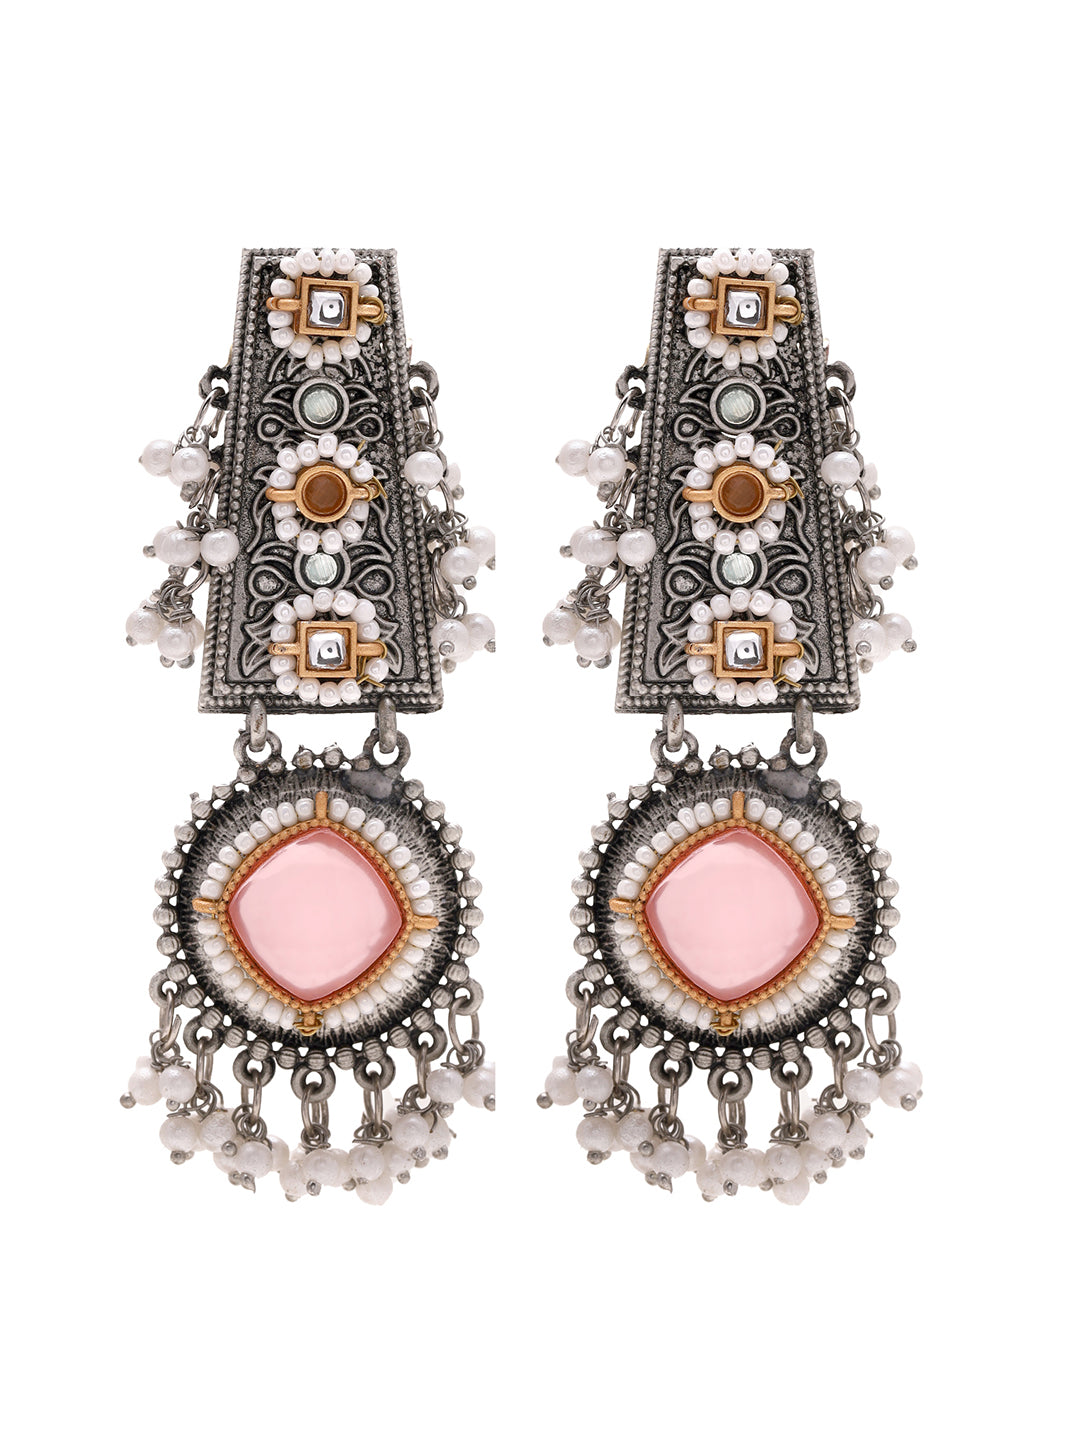 Priyaasi Crafting Temple Model Pearls and Exquisite Earrings